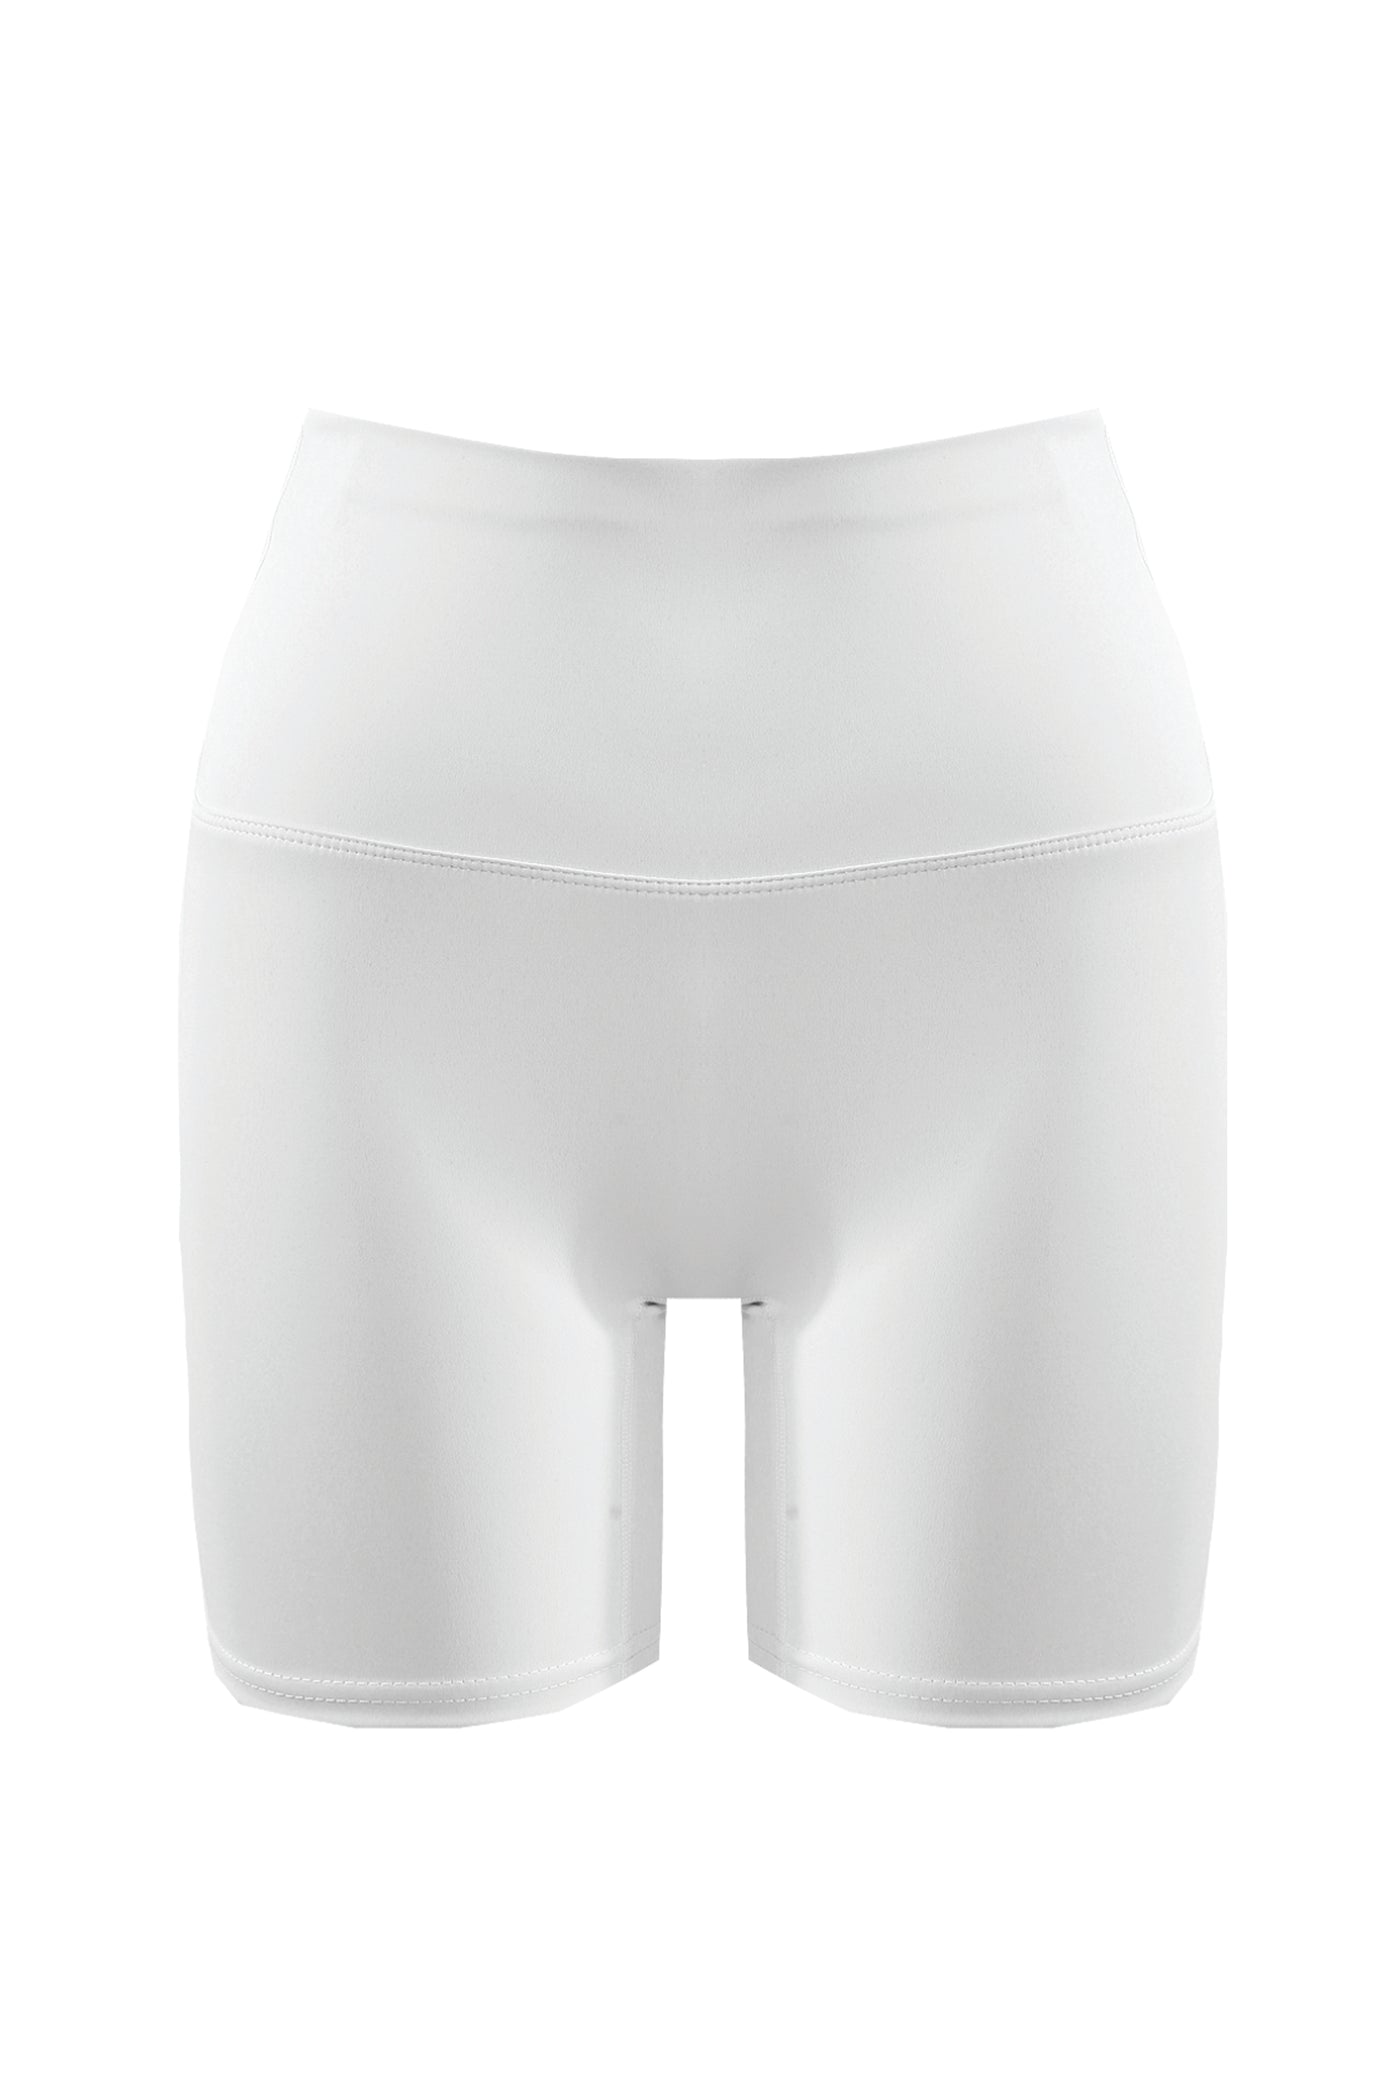 Slimming Cycling Shorts - White